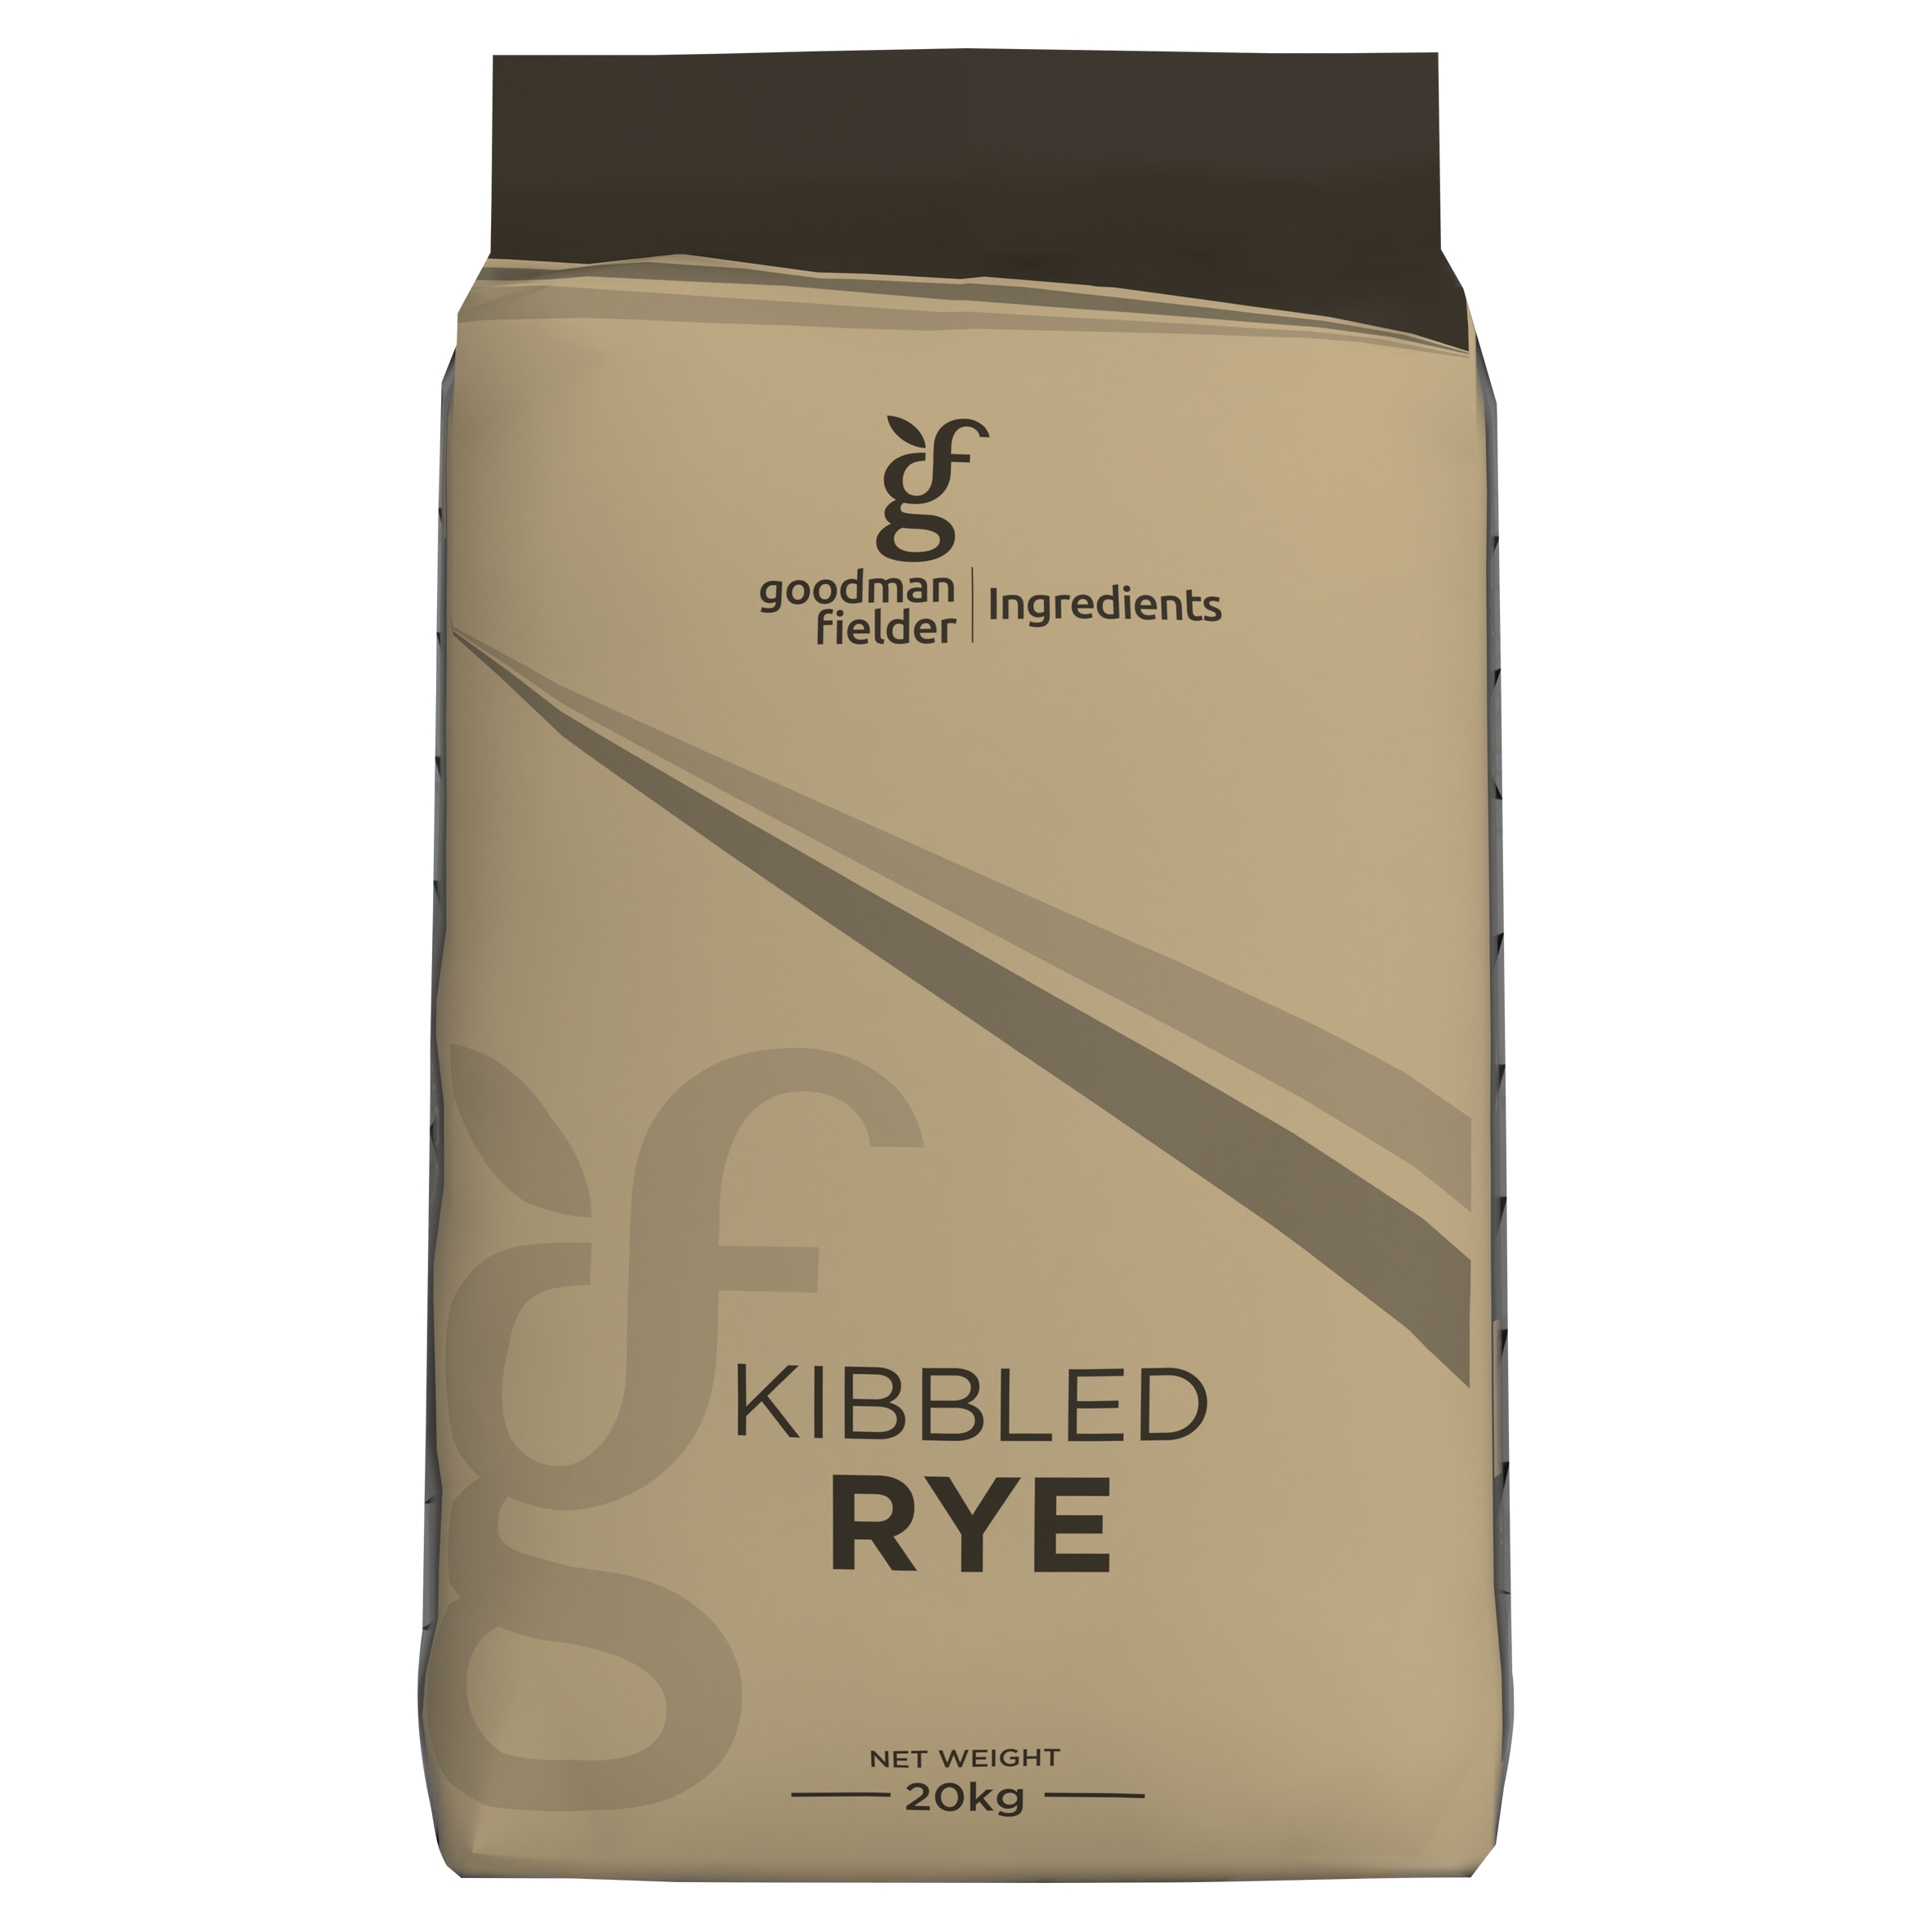 Goodman Fielder Ingredients Kibbled Rye 20kg product photo